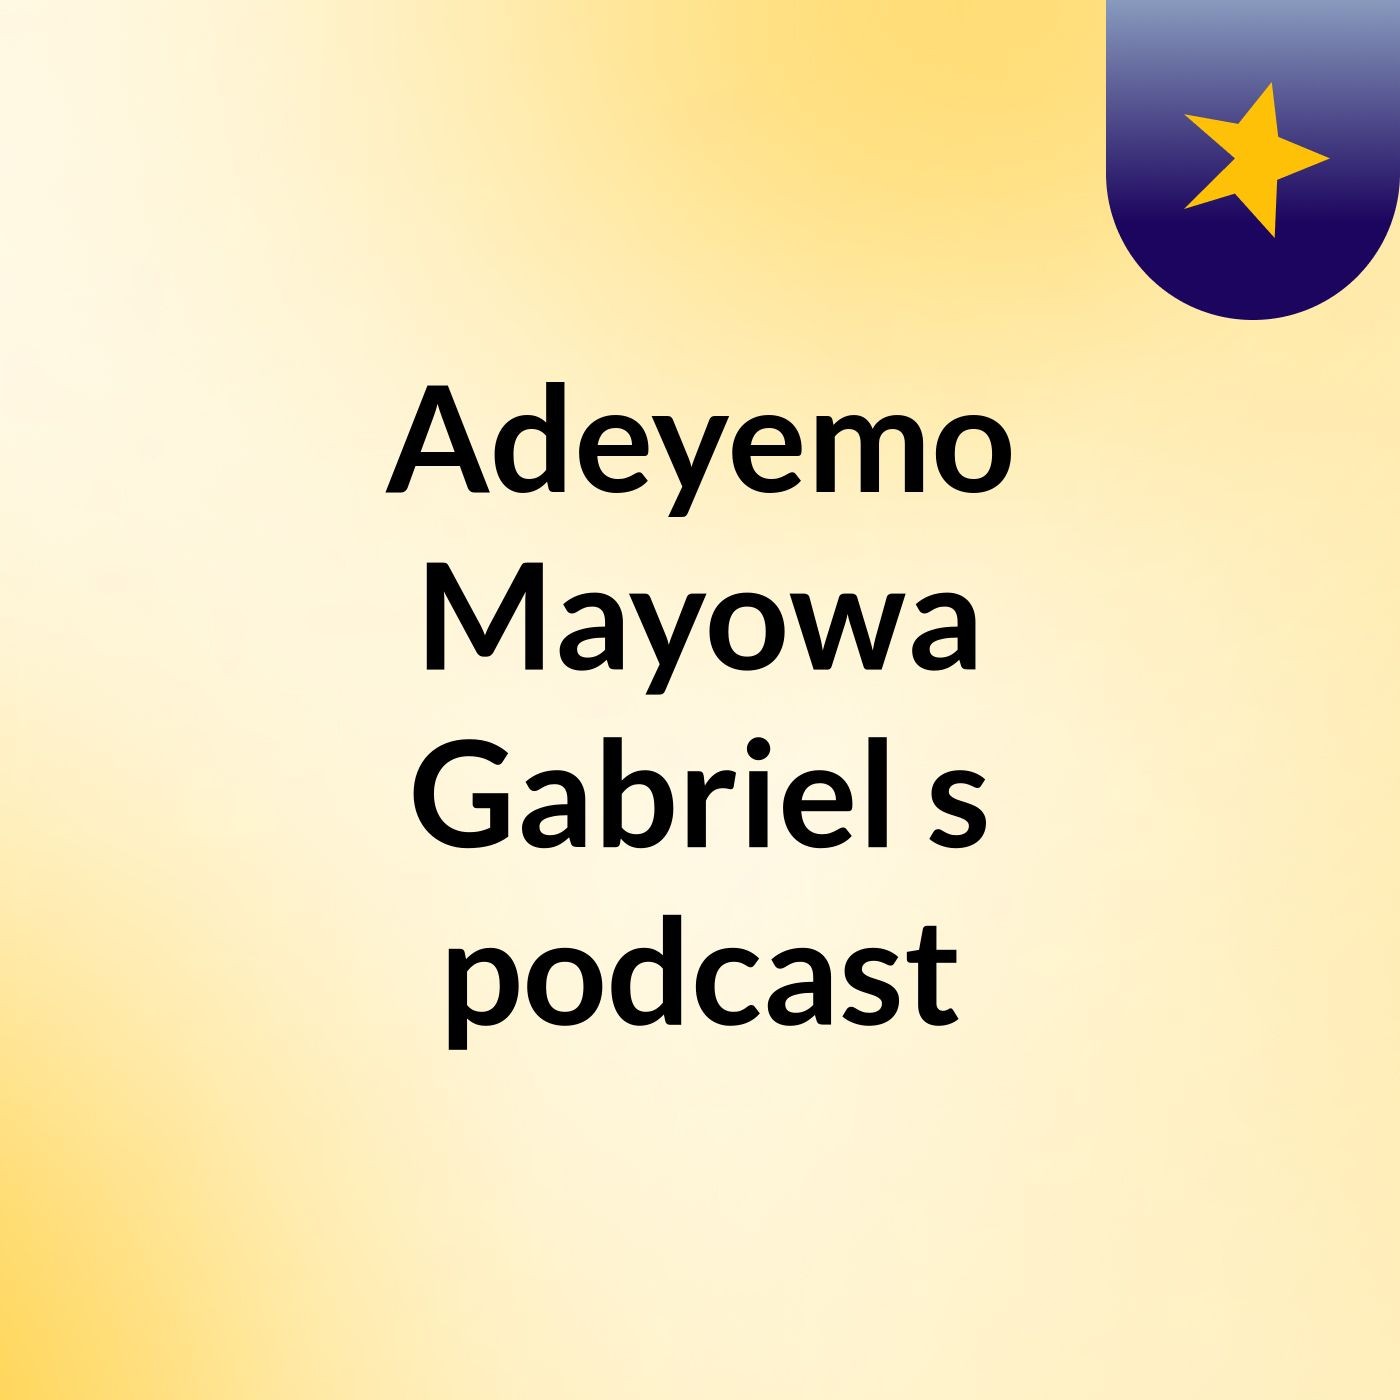 Episode 9 - Adeyemo Mayowa Gabriel's podcast